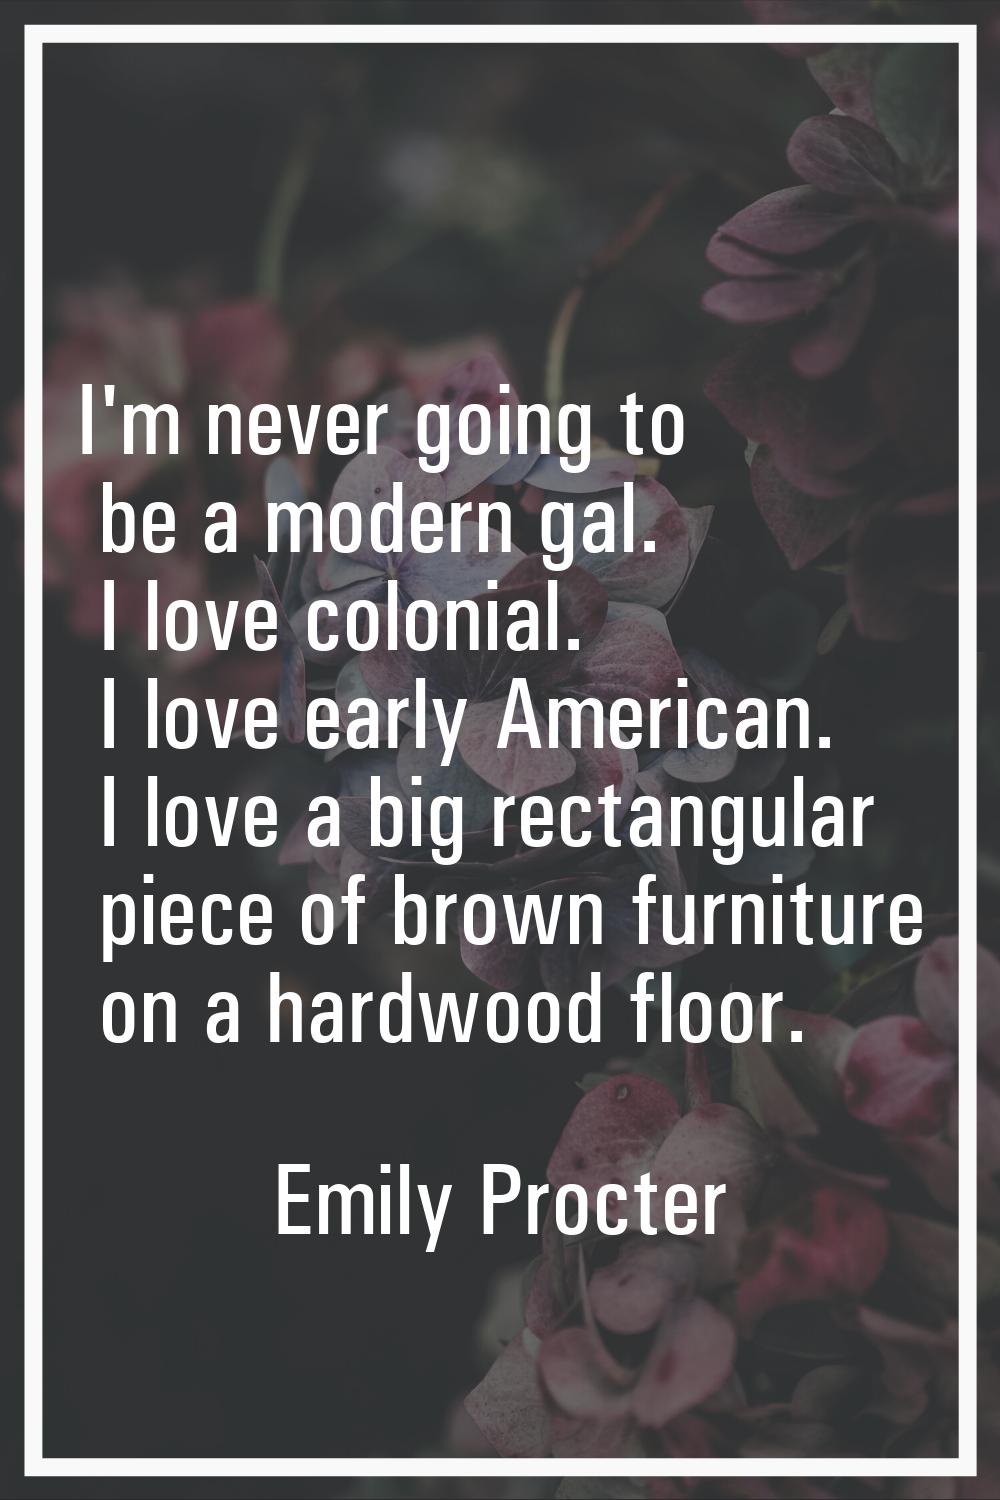 I'm never going to be a modern gal. I love colonial. I love early American. I love a big rectangula